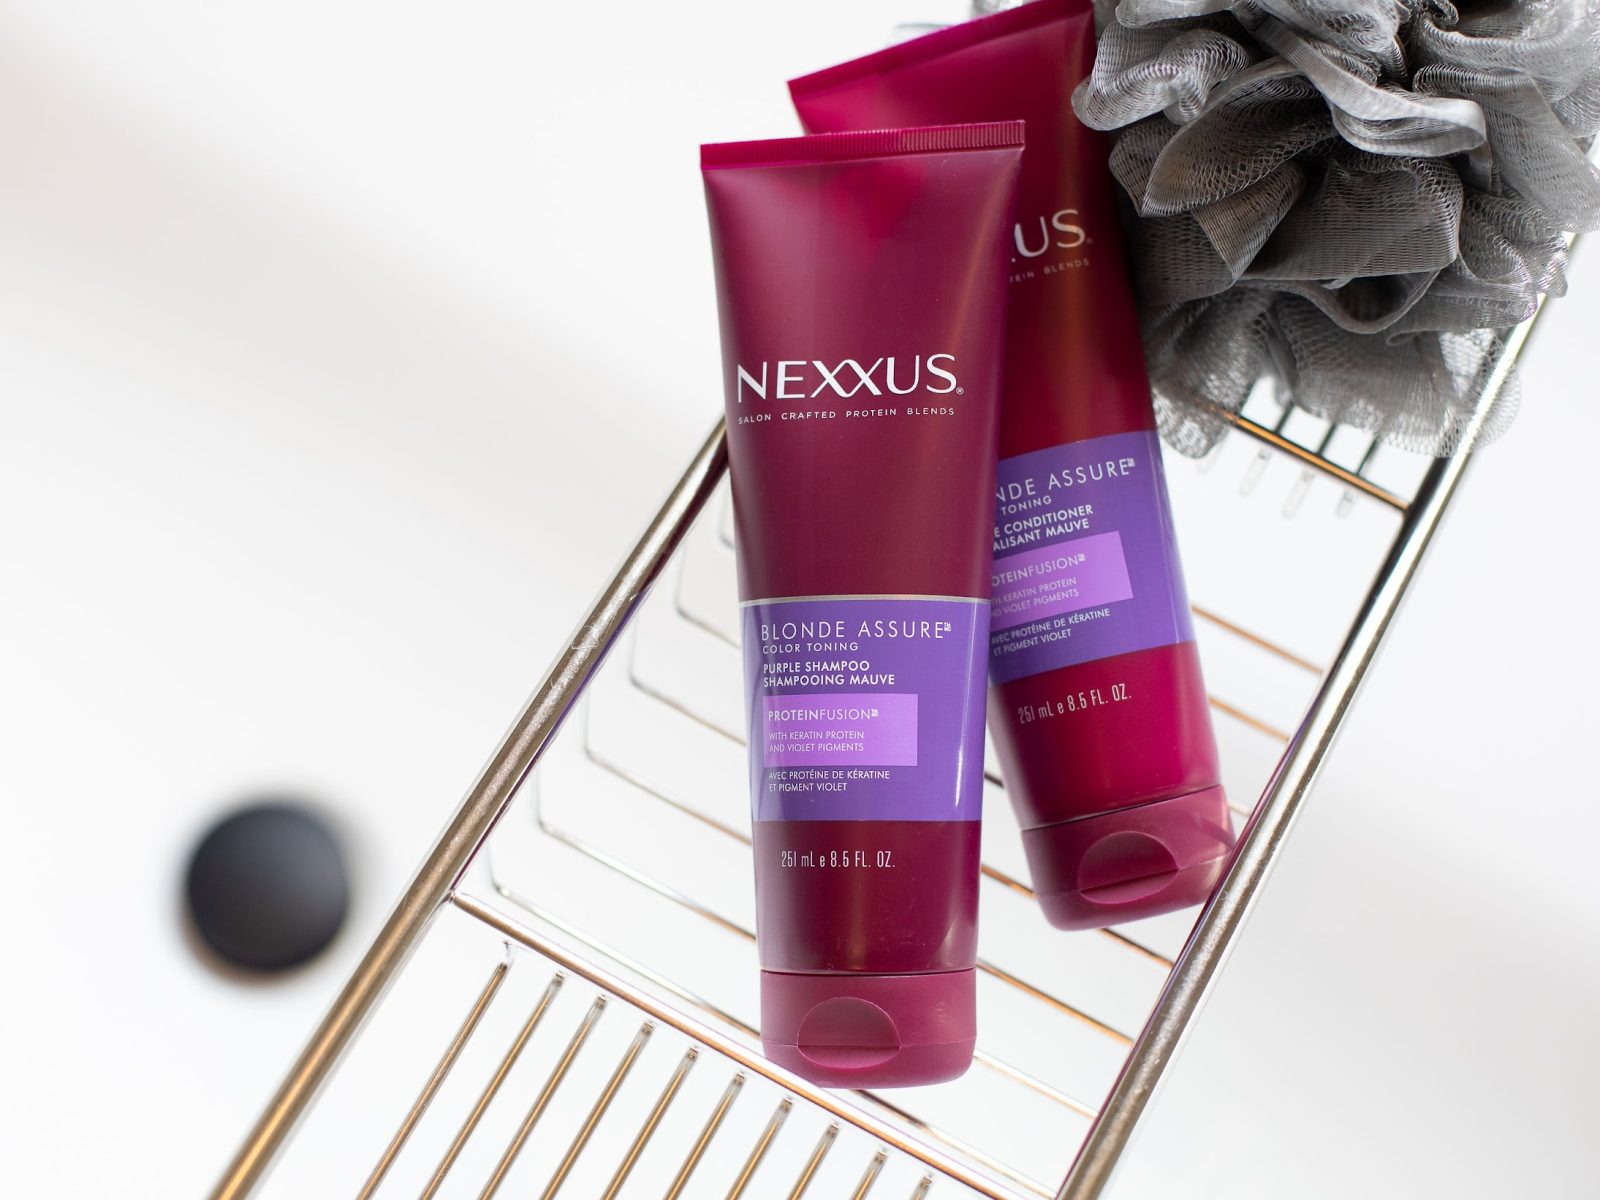 Nexxus Shampoo As Low As $5.99 At Publix